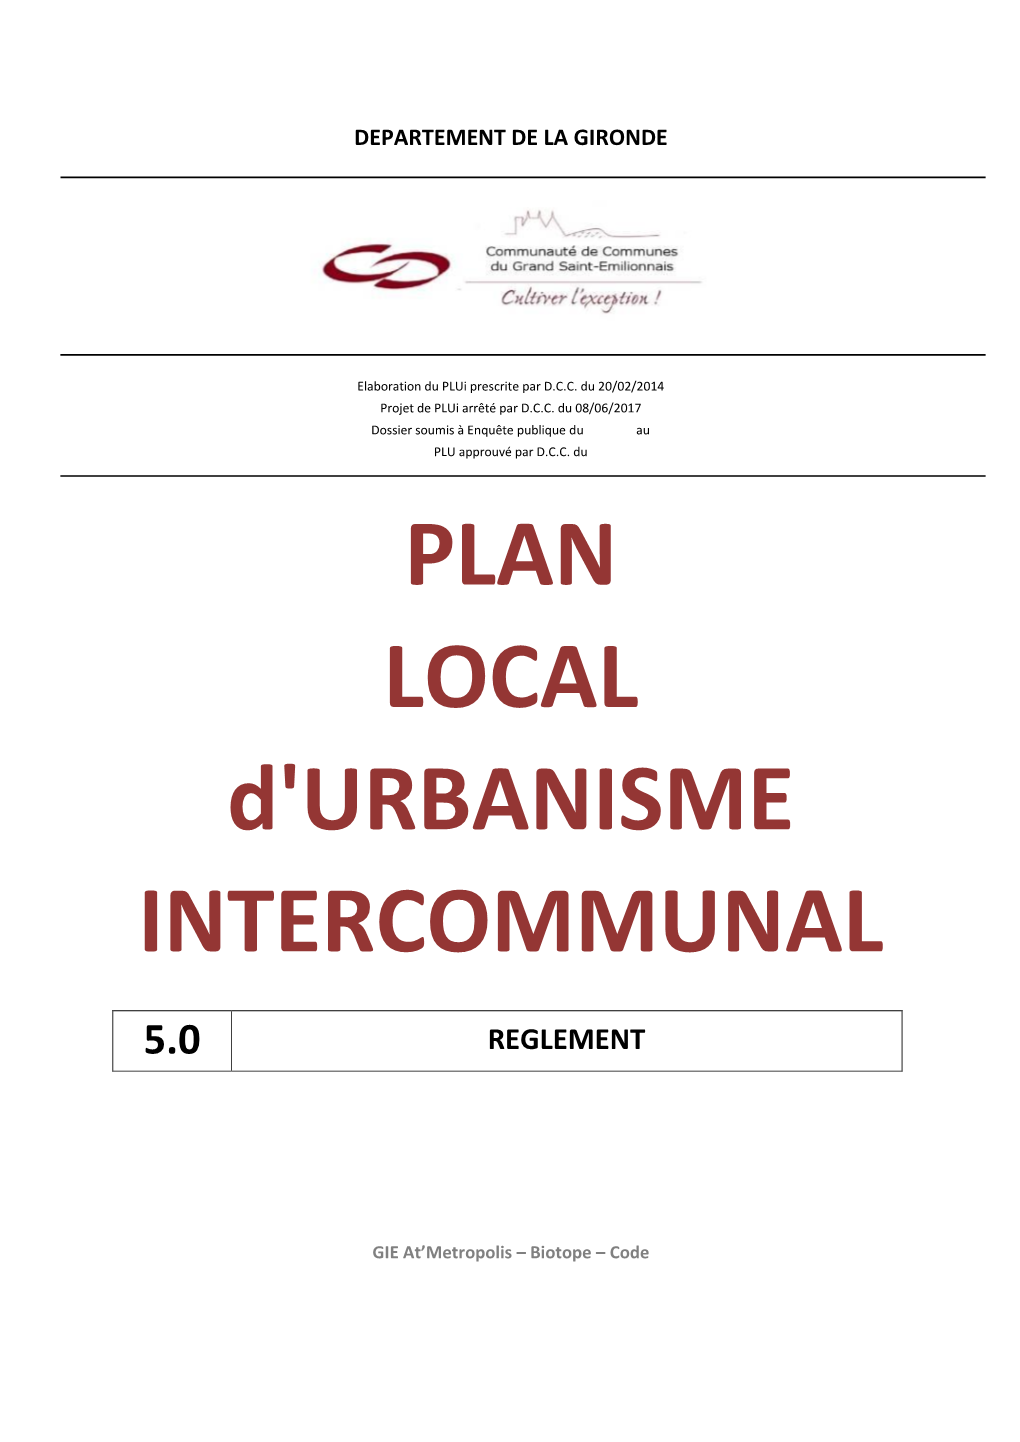 PLAN LOCAL D'urbanisme INTERCOMMUNAL